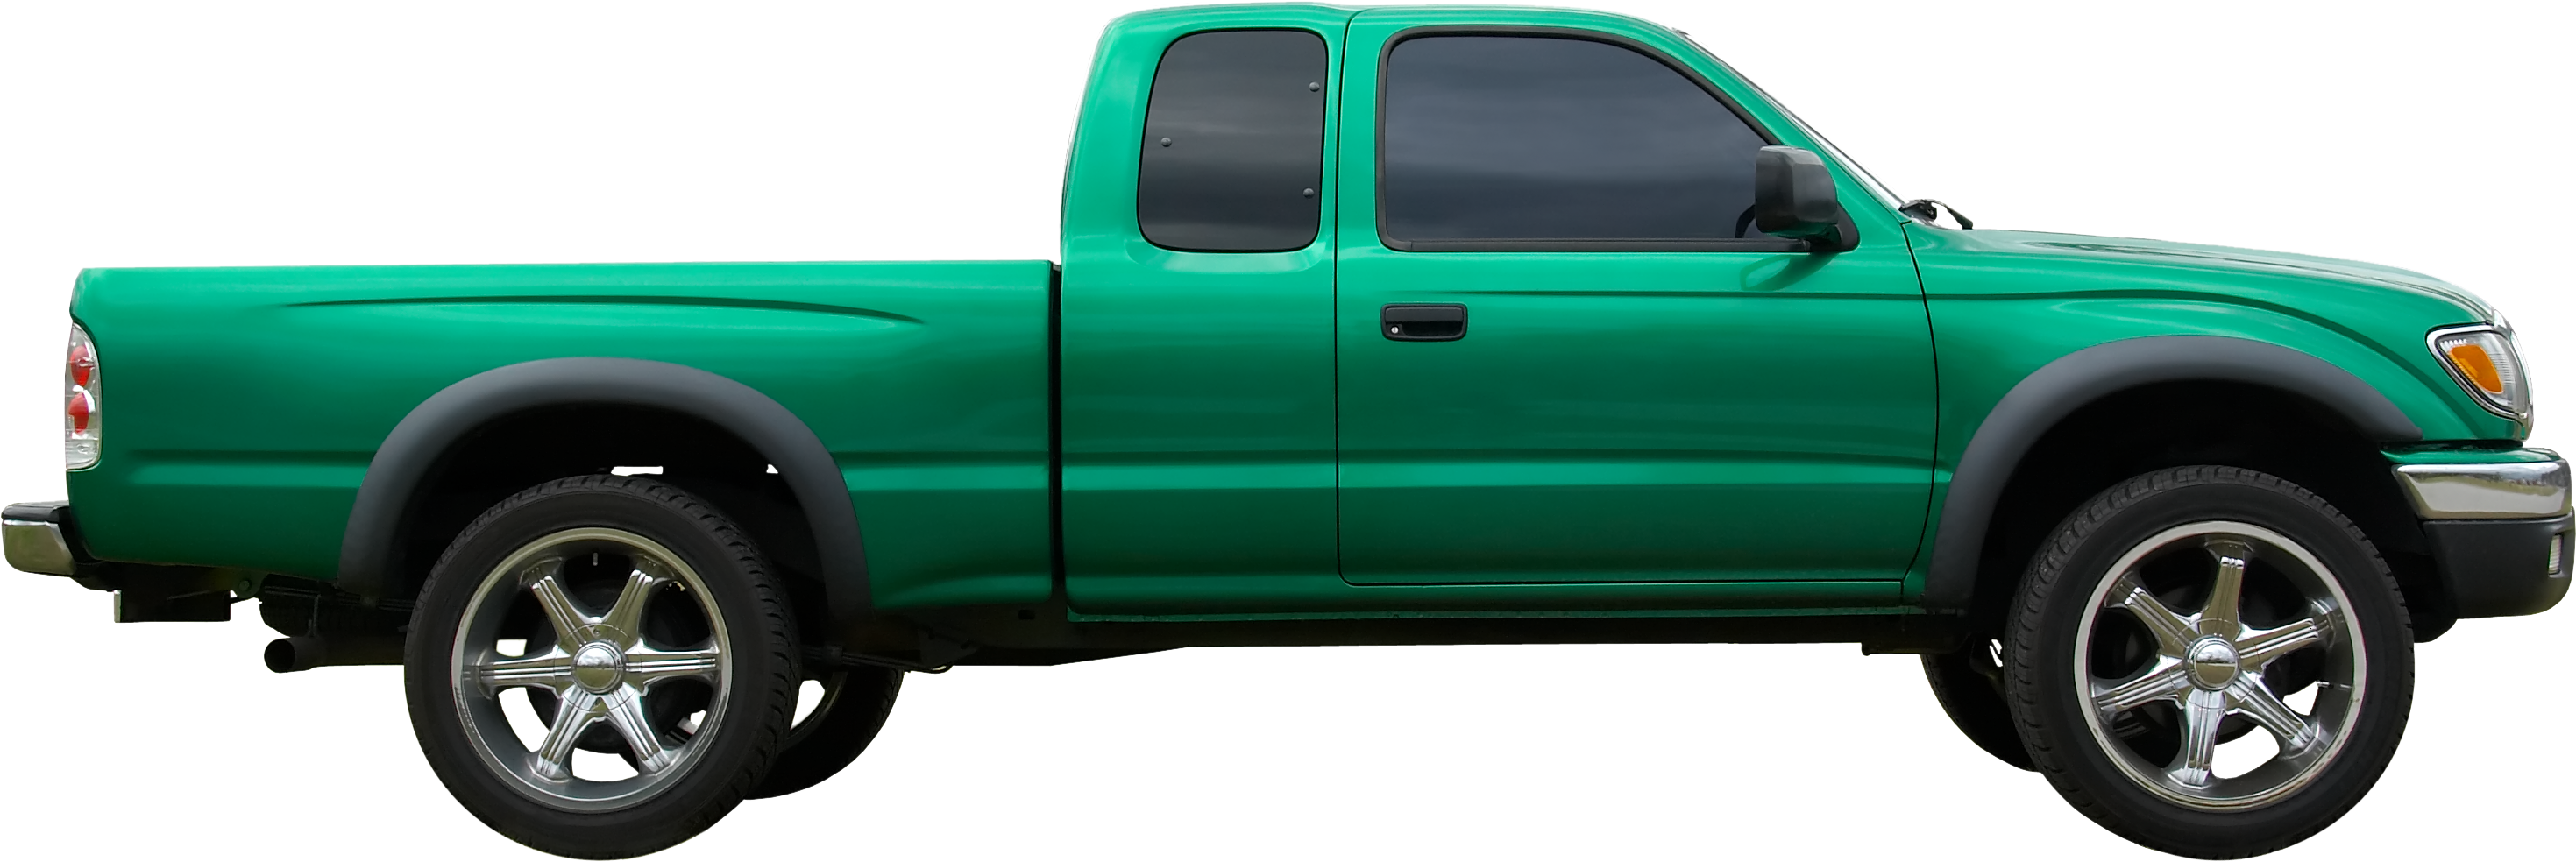 Side Pickup Truck PNG Background Image